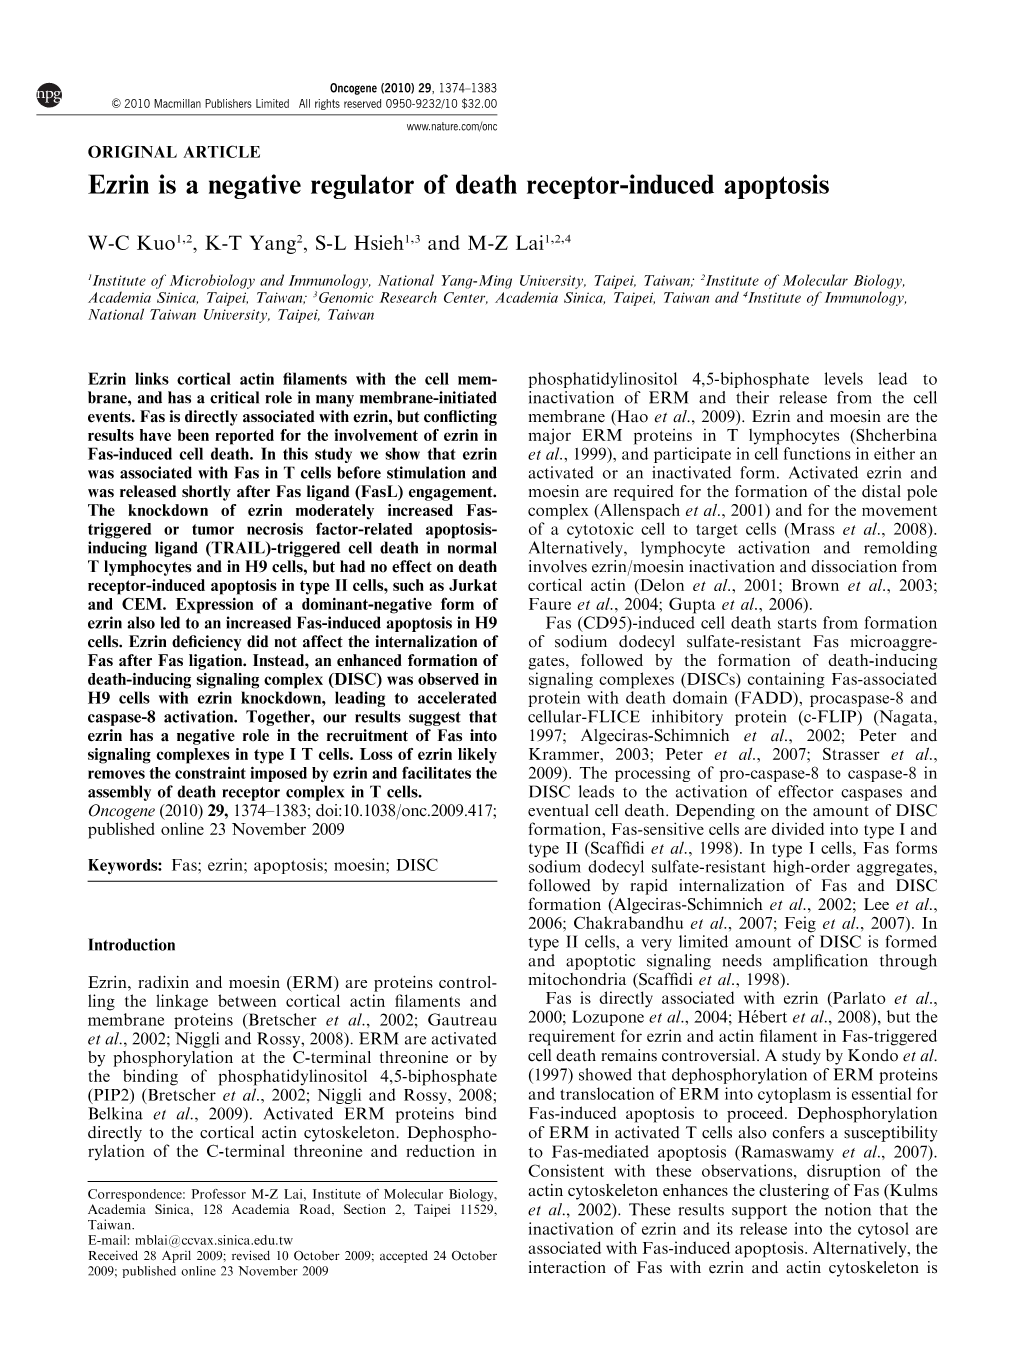 Ezrin Is a Negative Regulator of Death Receptor-Induced Apoptosis